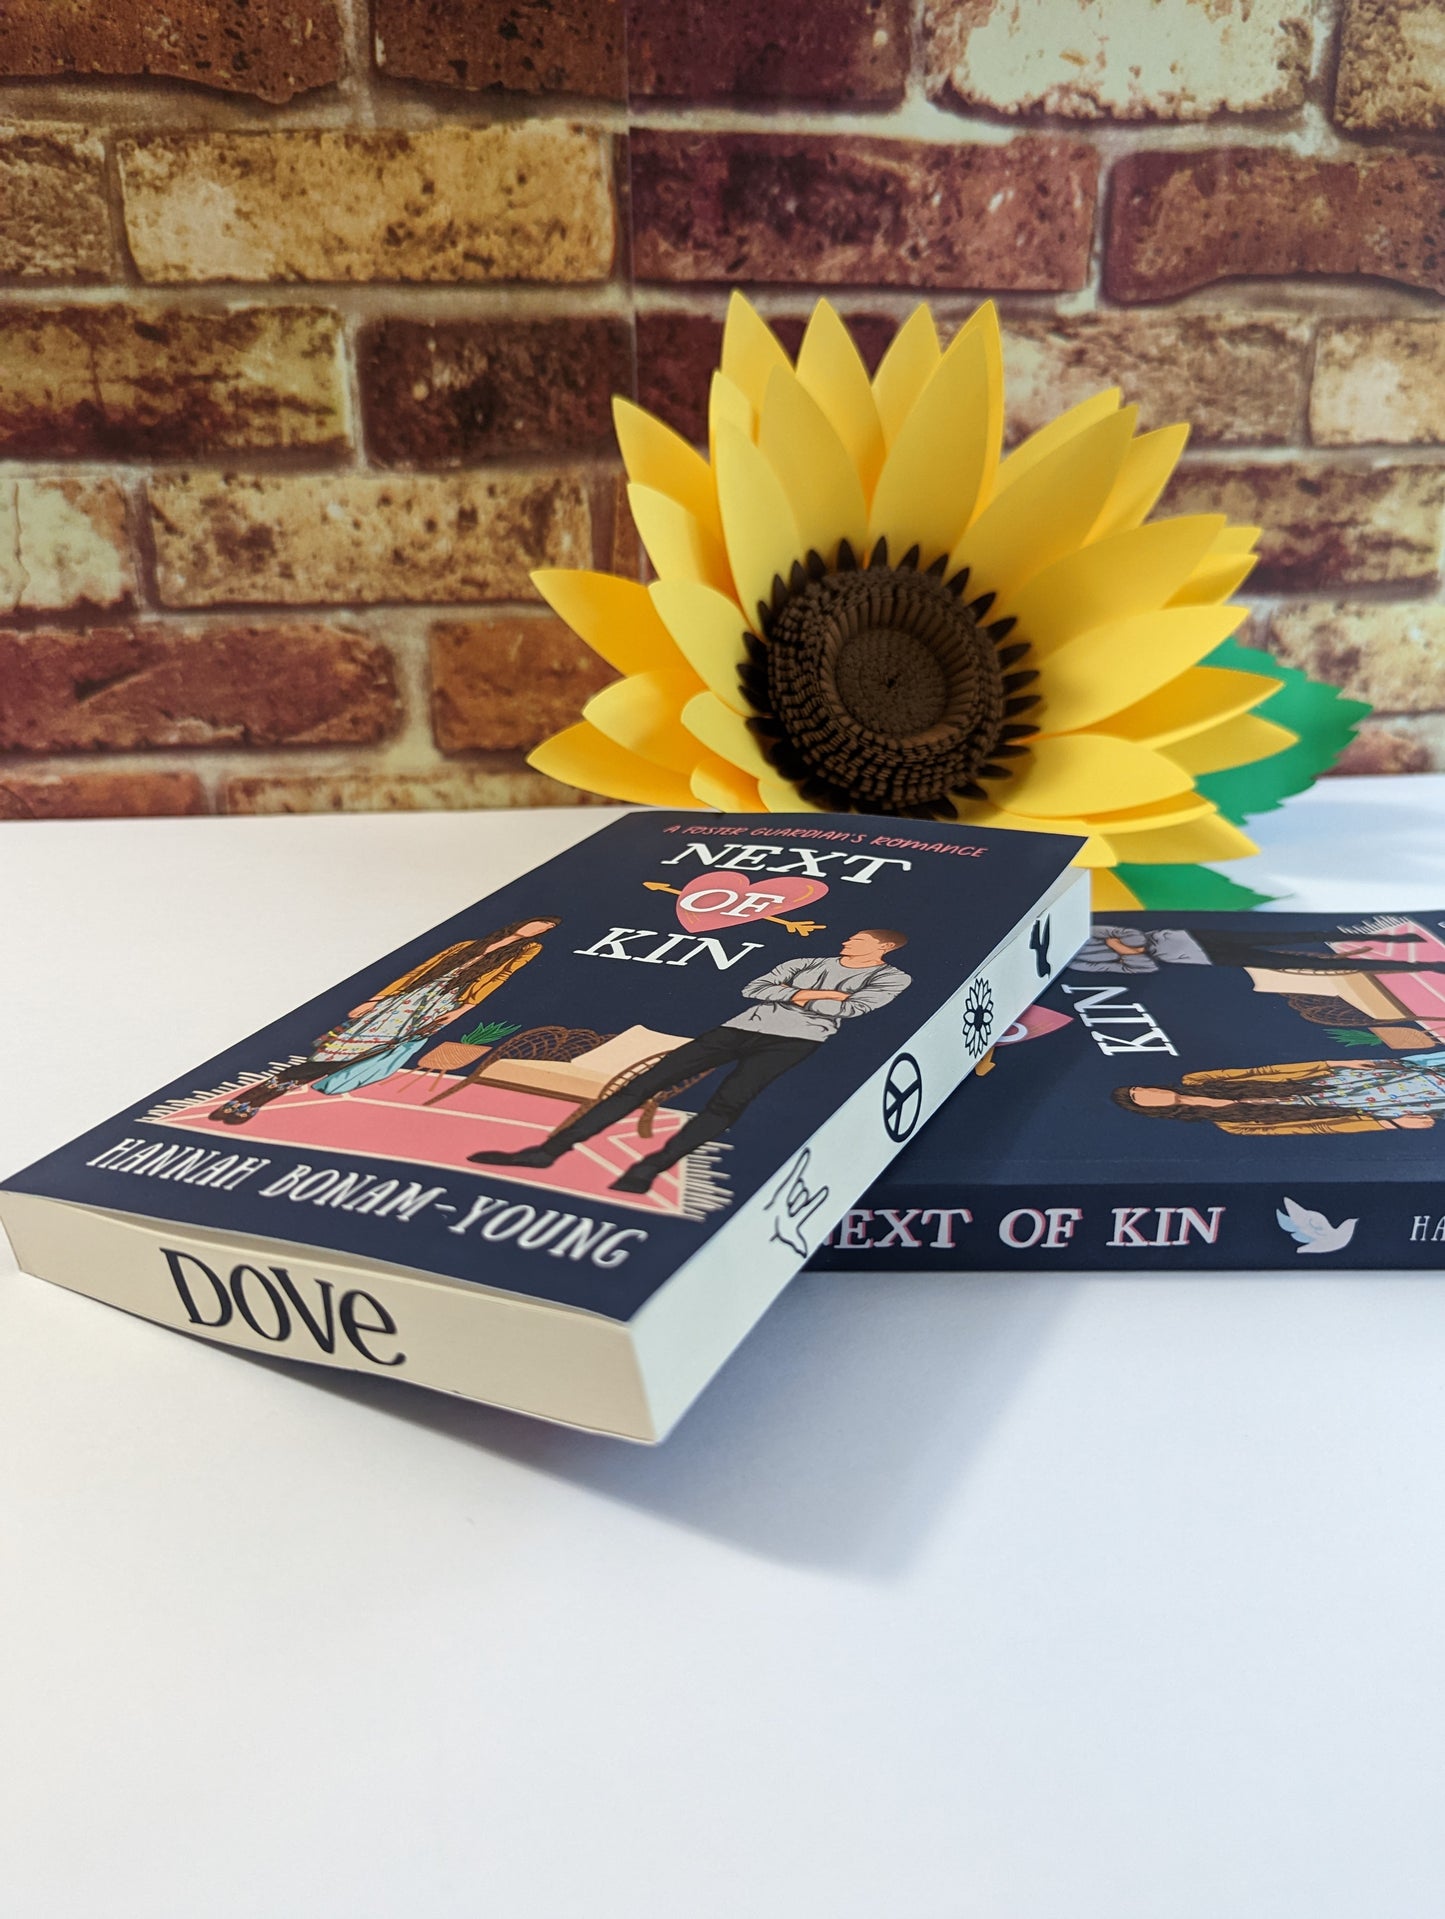 Next of Kin by Hannah Bonam-Young ORIGINAL COVER